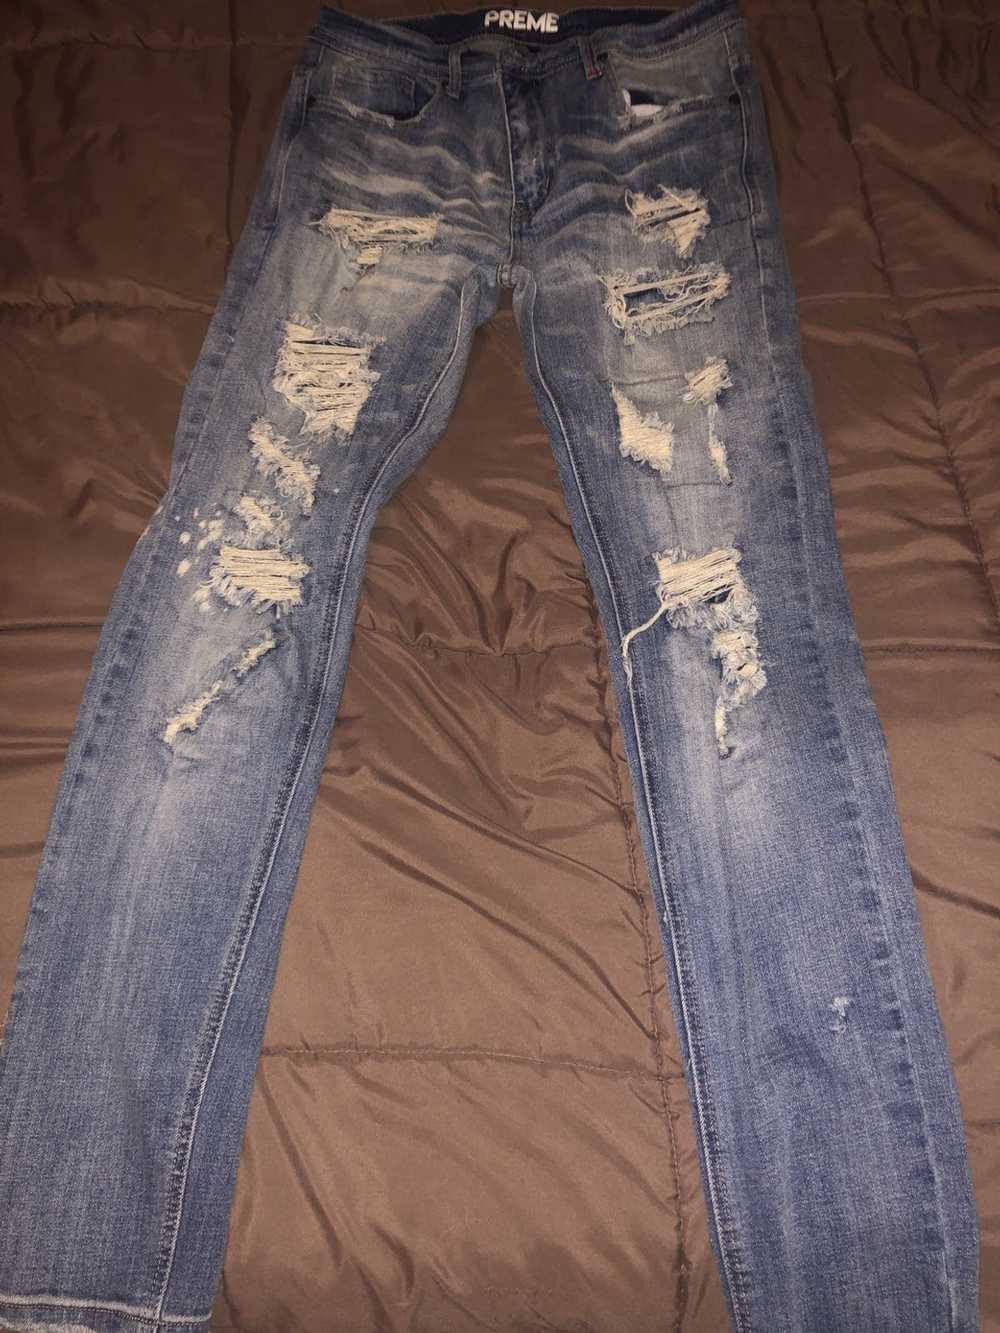 Streetwear Preme Distressed Denim Jeans - image 2